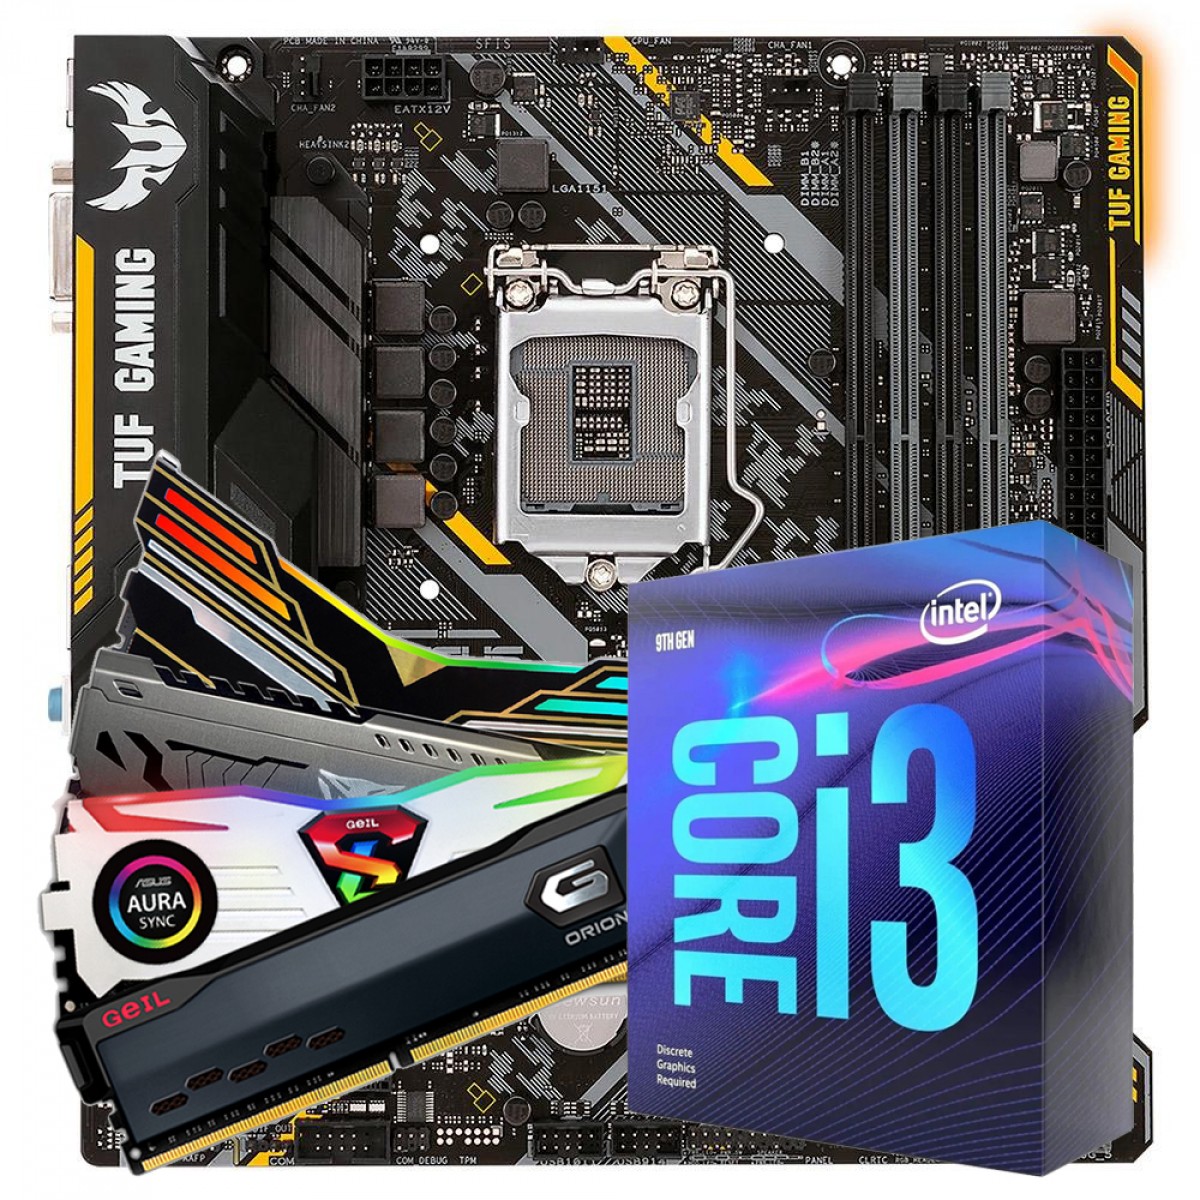 Kit Upgrade, Asus TUF B360M-Plus Gaming/BR + Intel Core I3 9100F + 16GB DDR4 3000MHz